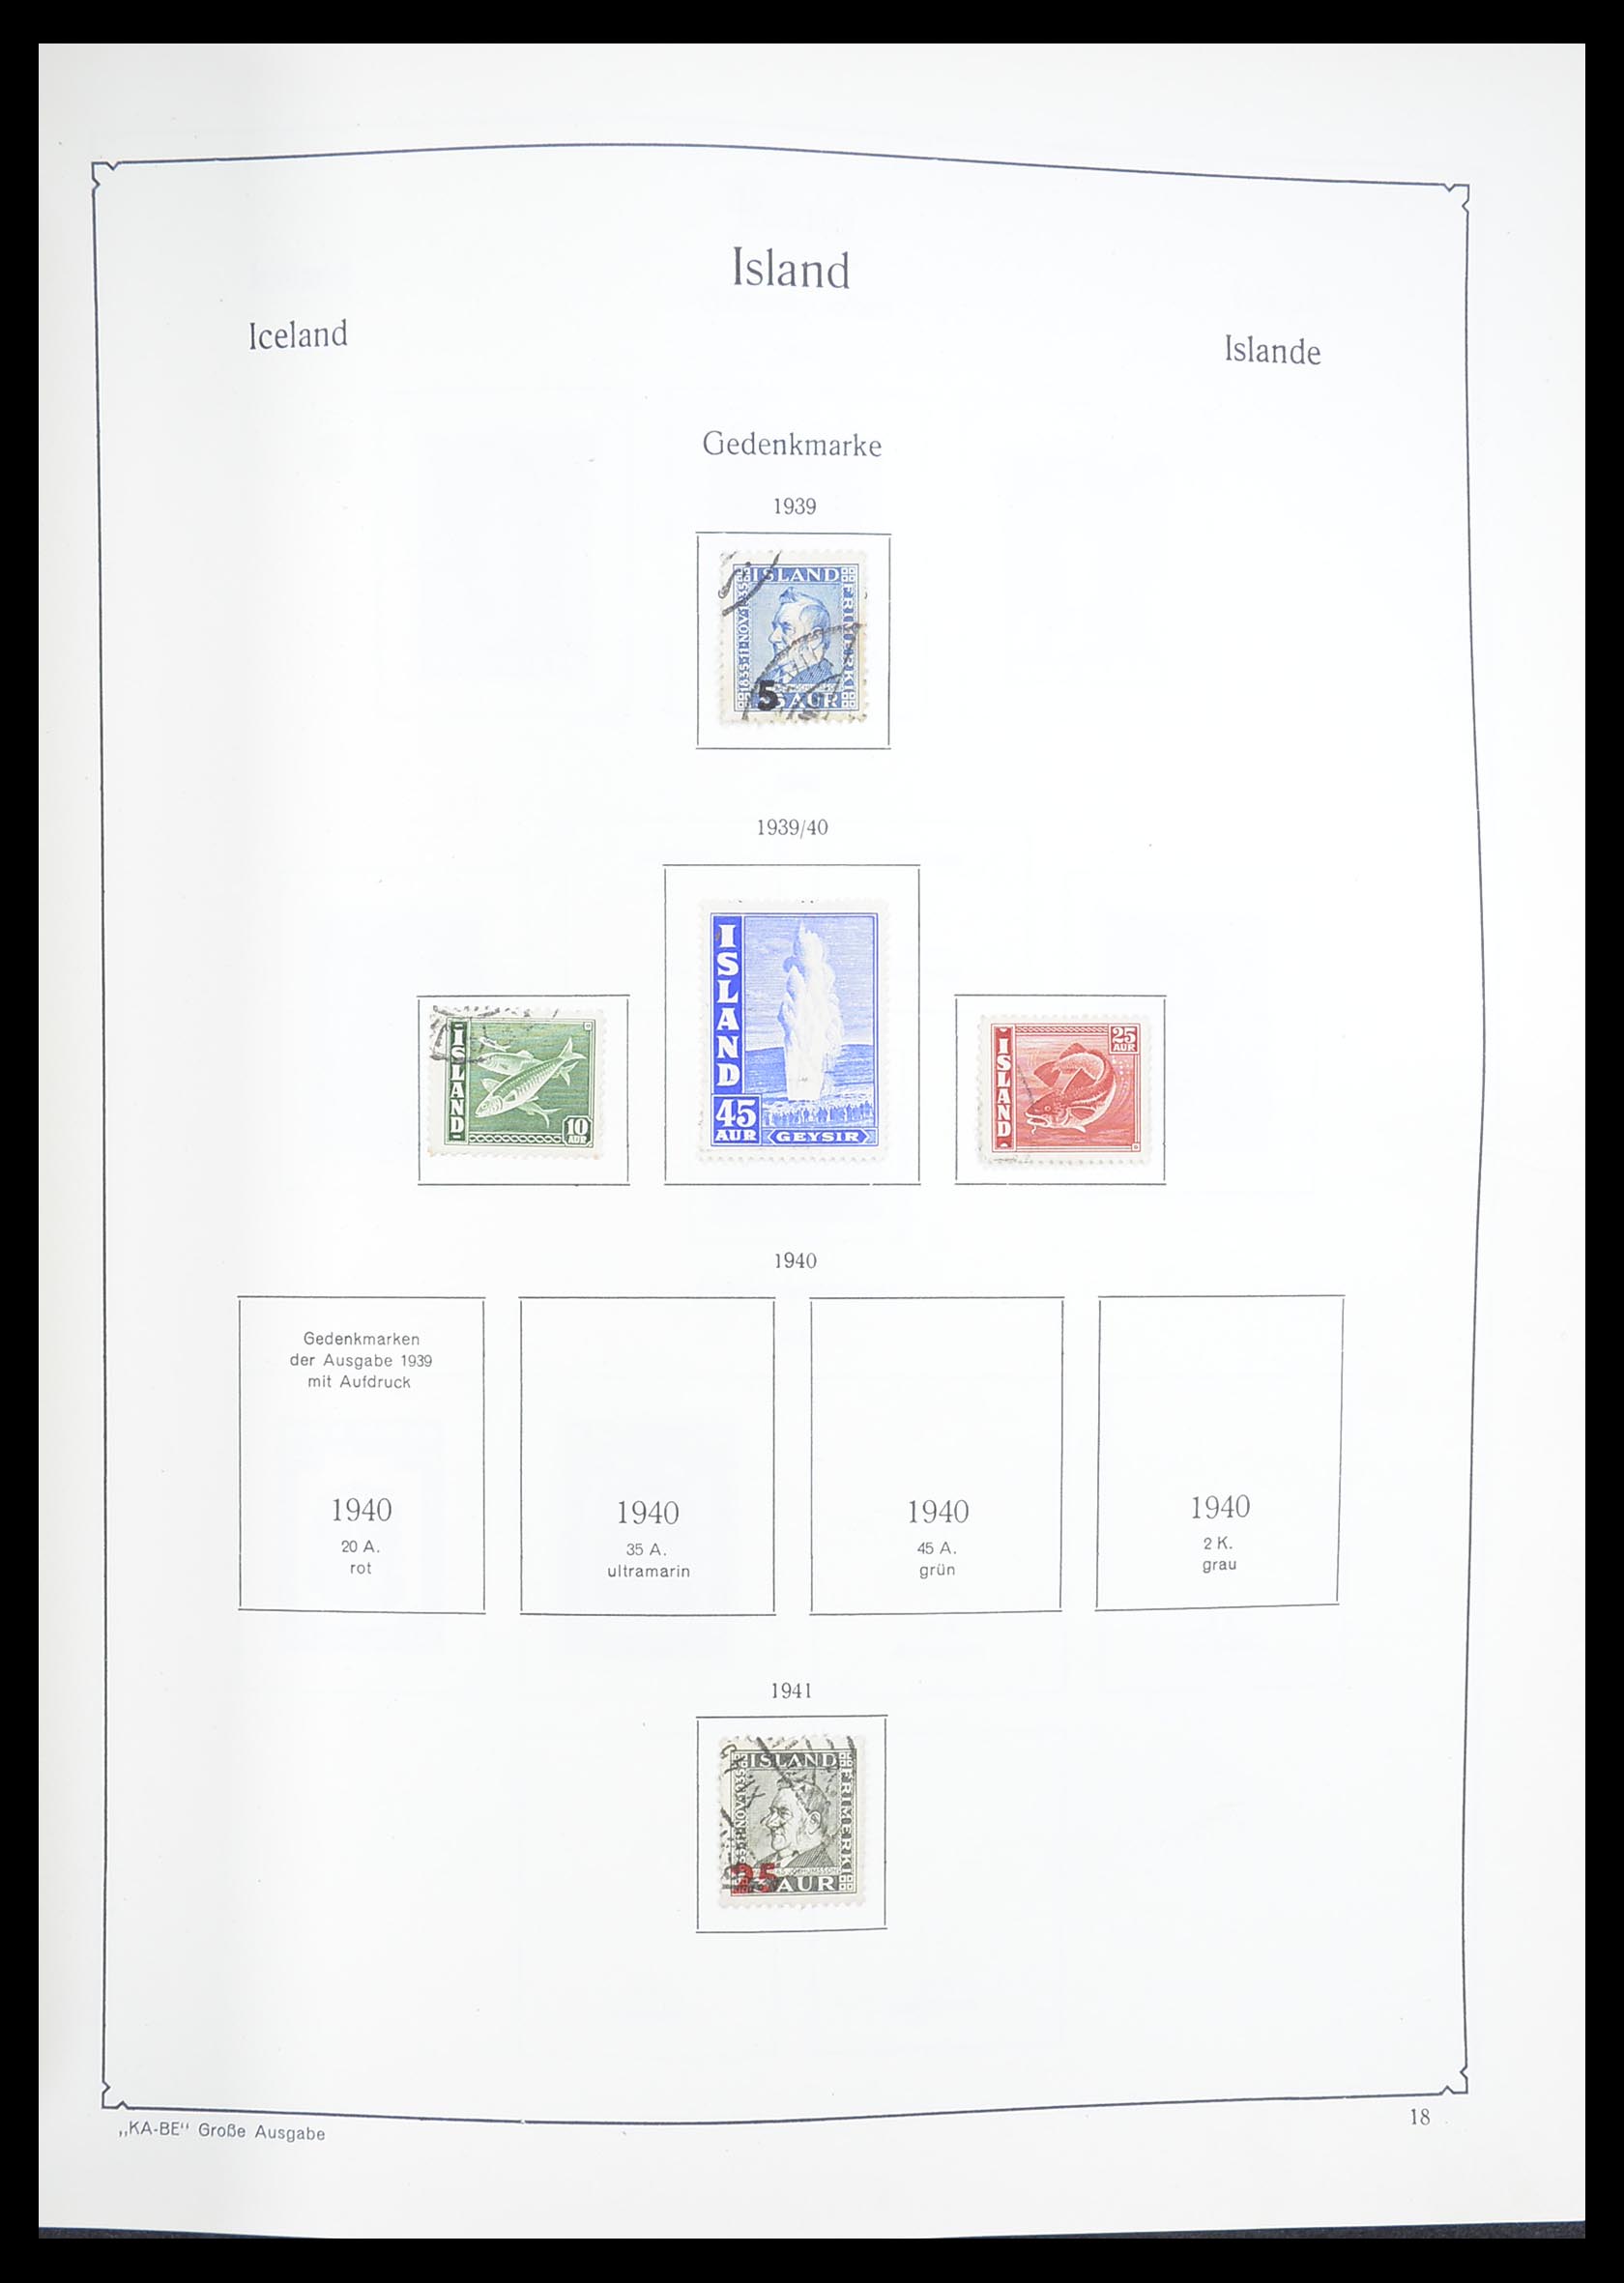 33379 074 - Stamp collection 33379 Scandinavia 1856-1972.